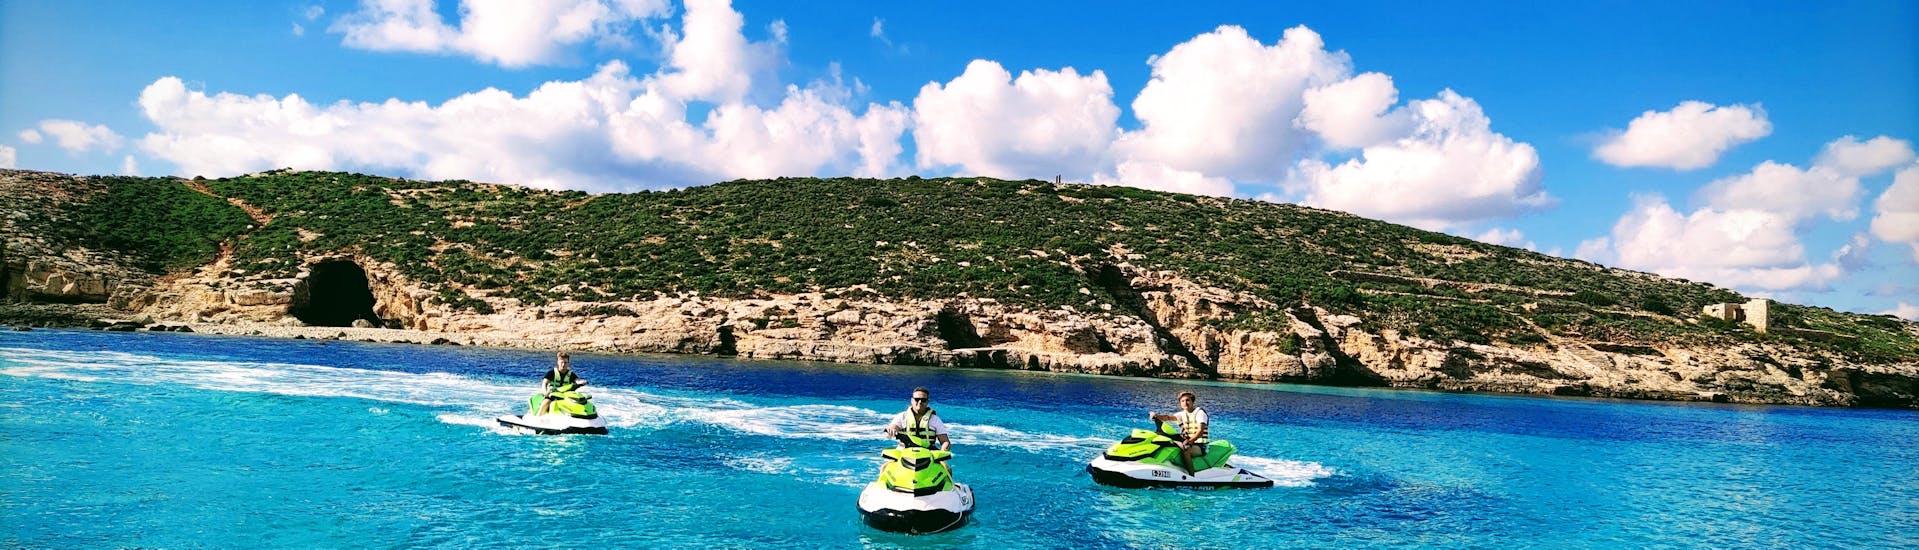 Jetski in Qala - Blue Lagoon Malta.